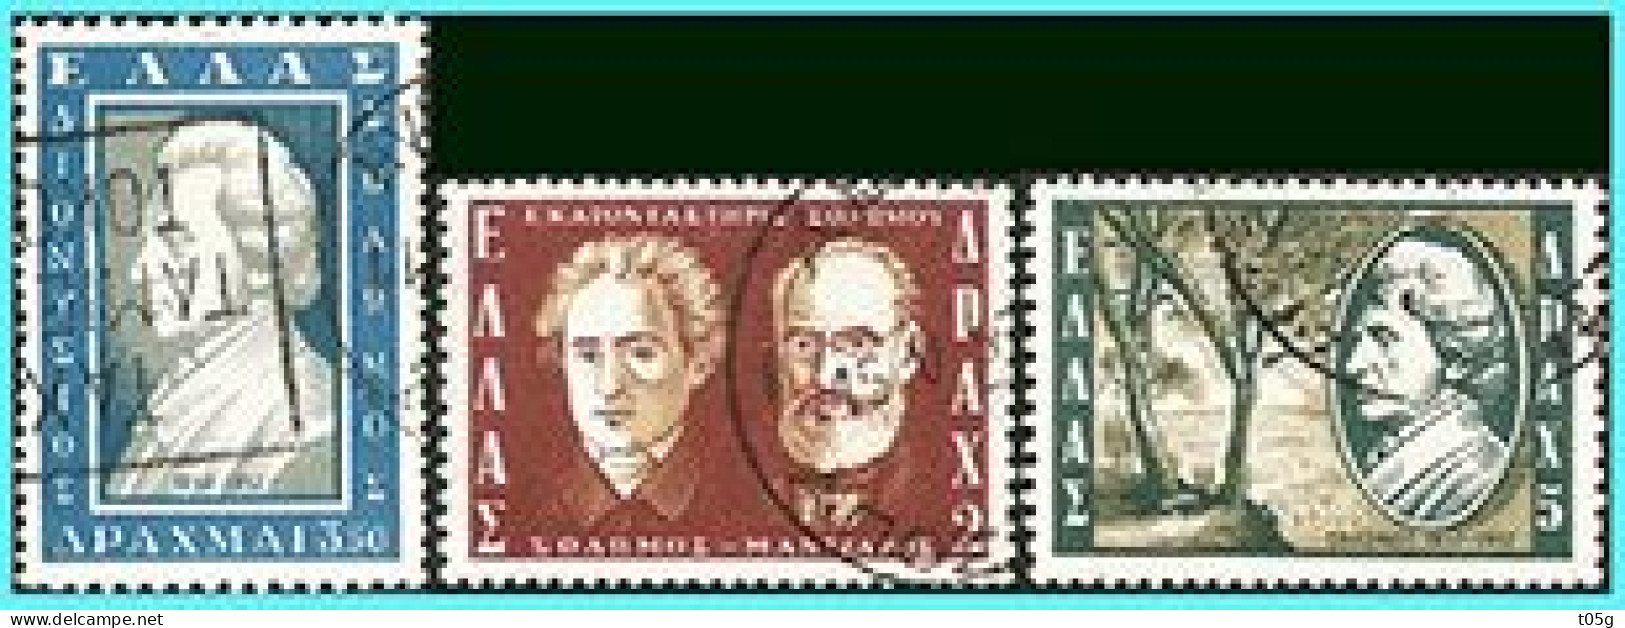 GREECE- GRECE - HELLAS  1957: "D. Solomos" Compl. Set Used - Used Stamps